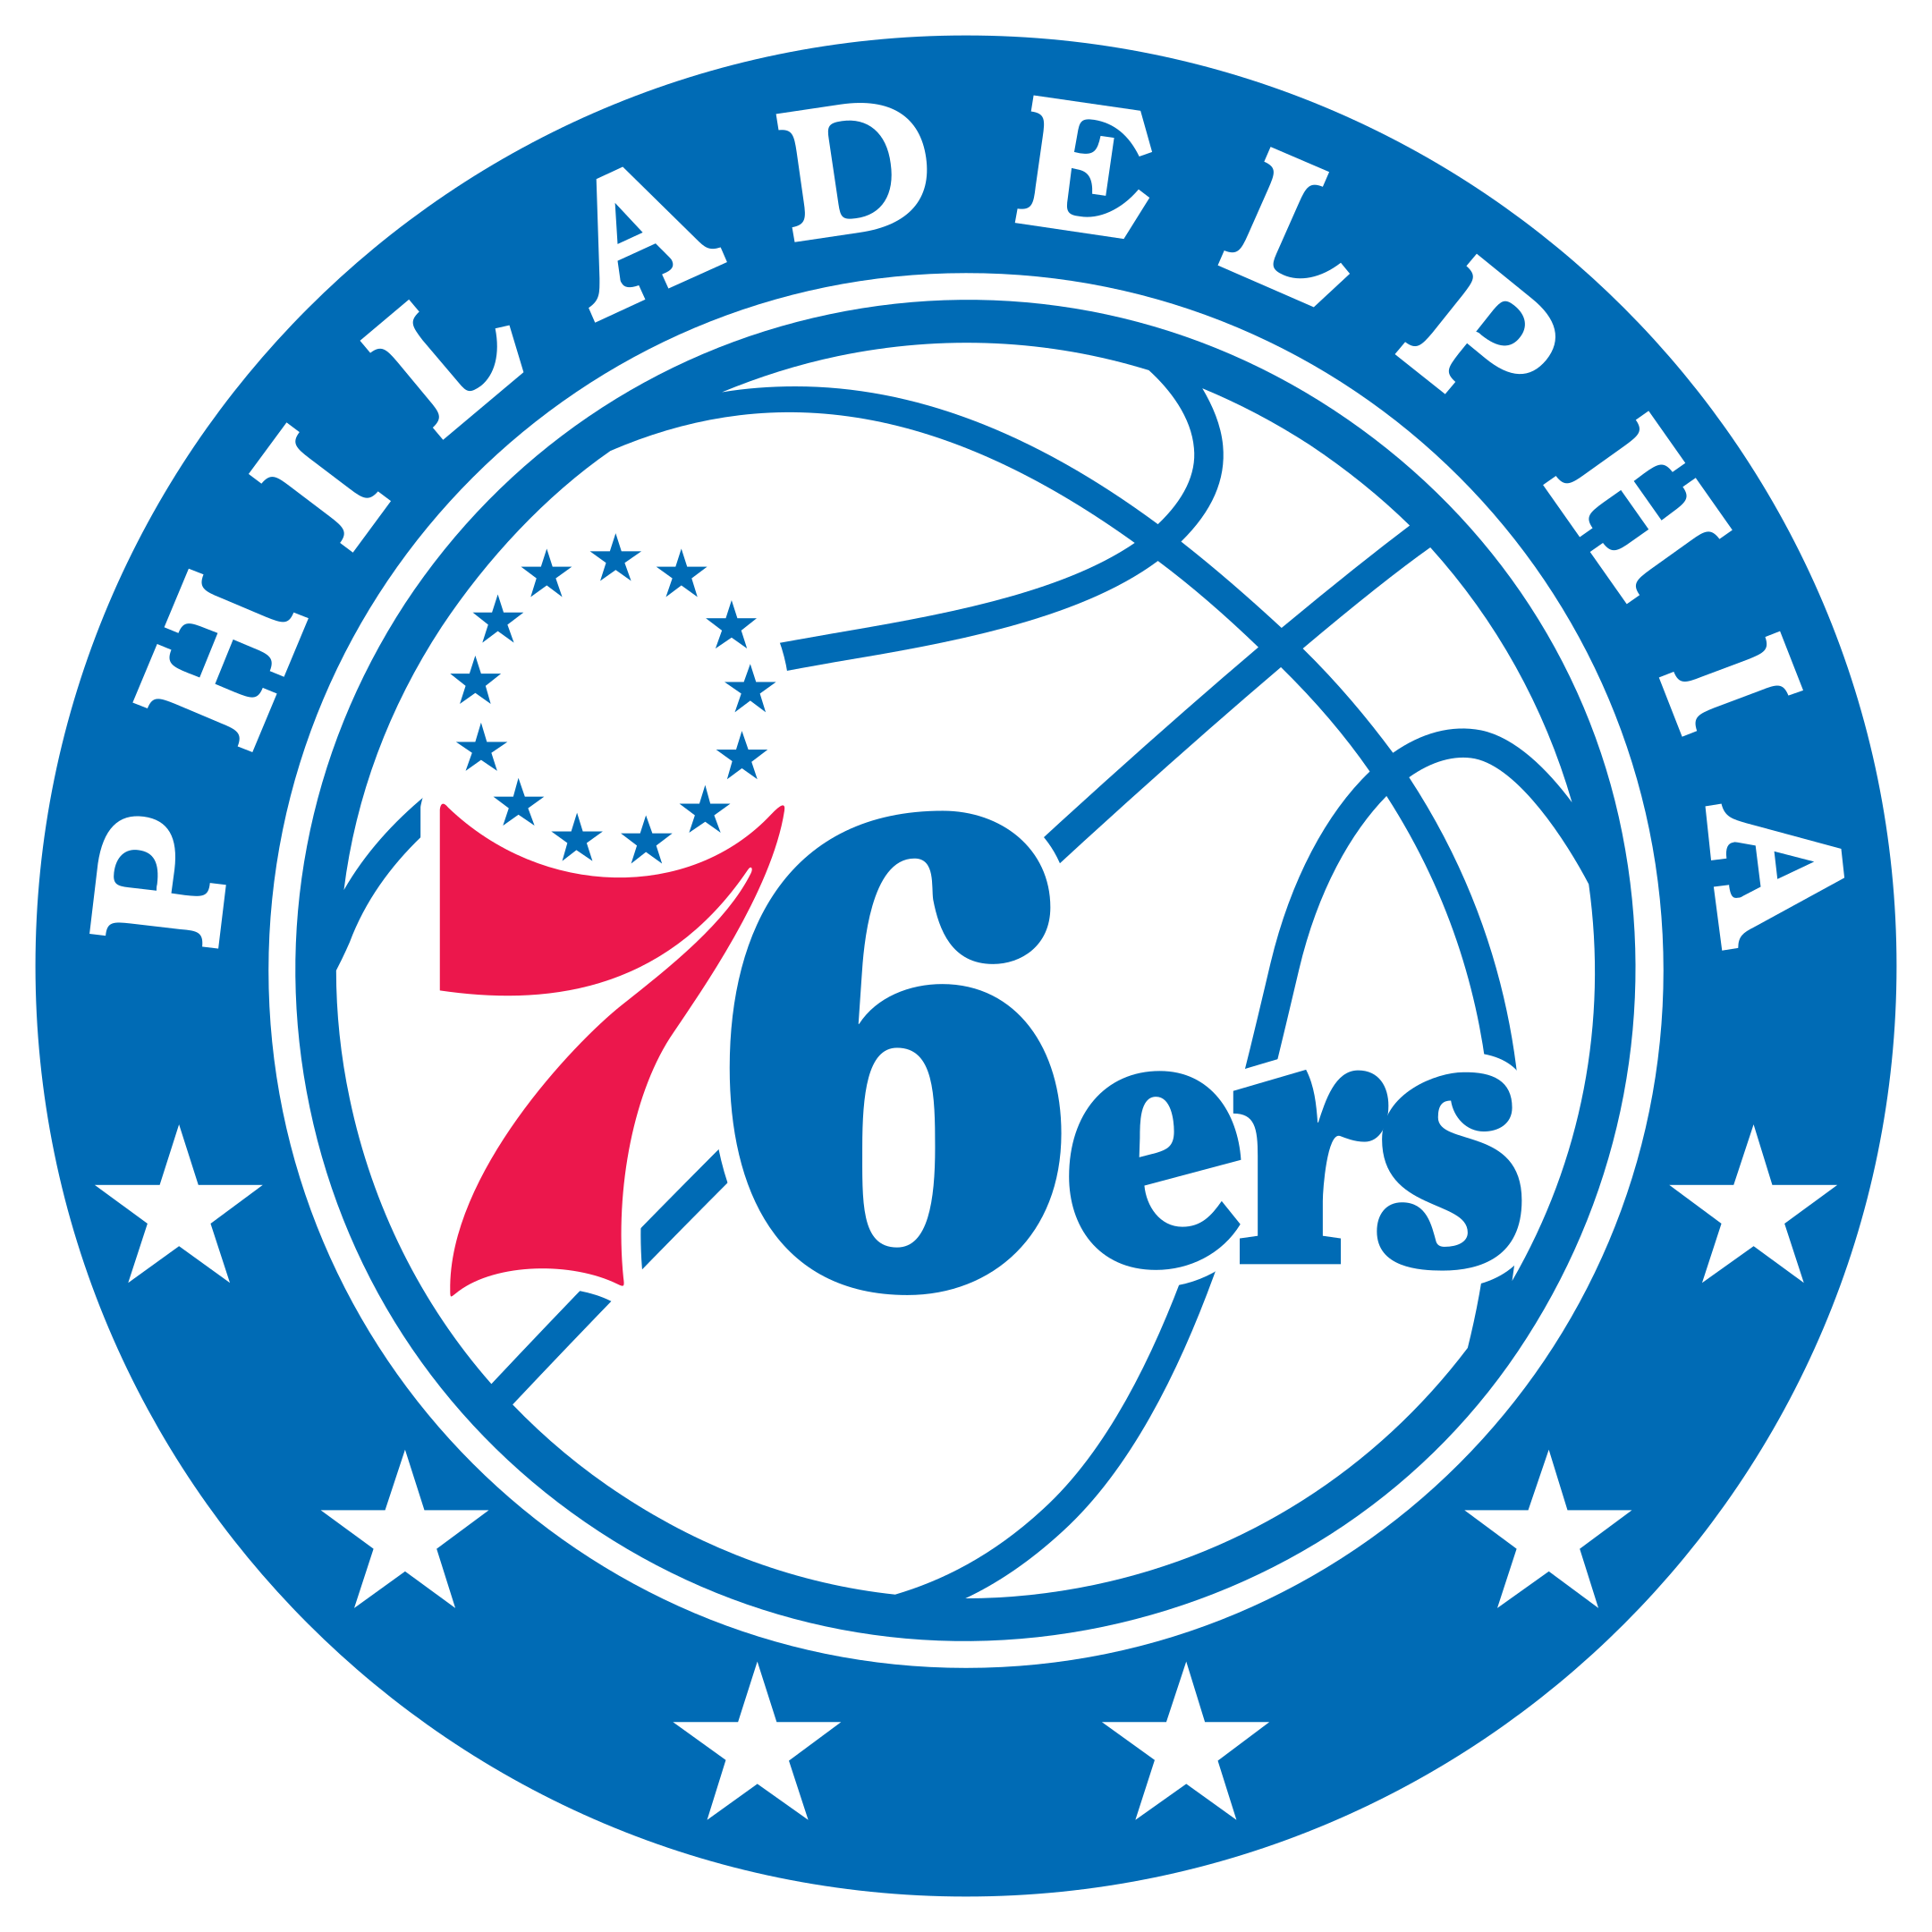 philadelphia 76ers logo 1 - Philadelphia 76ers Logo